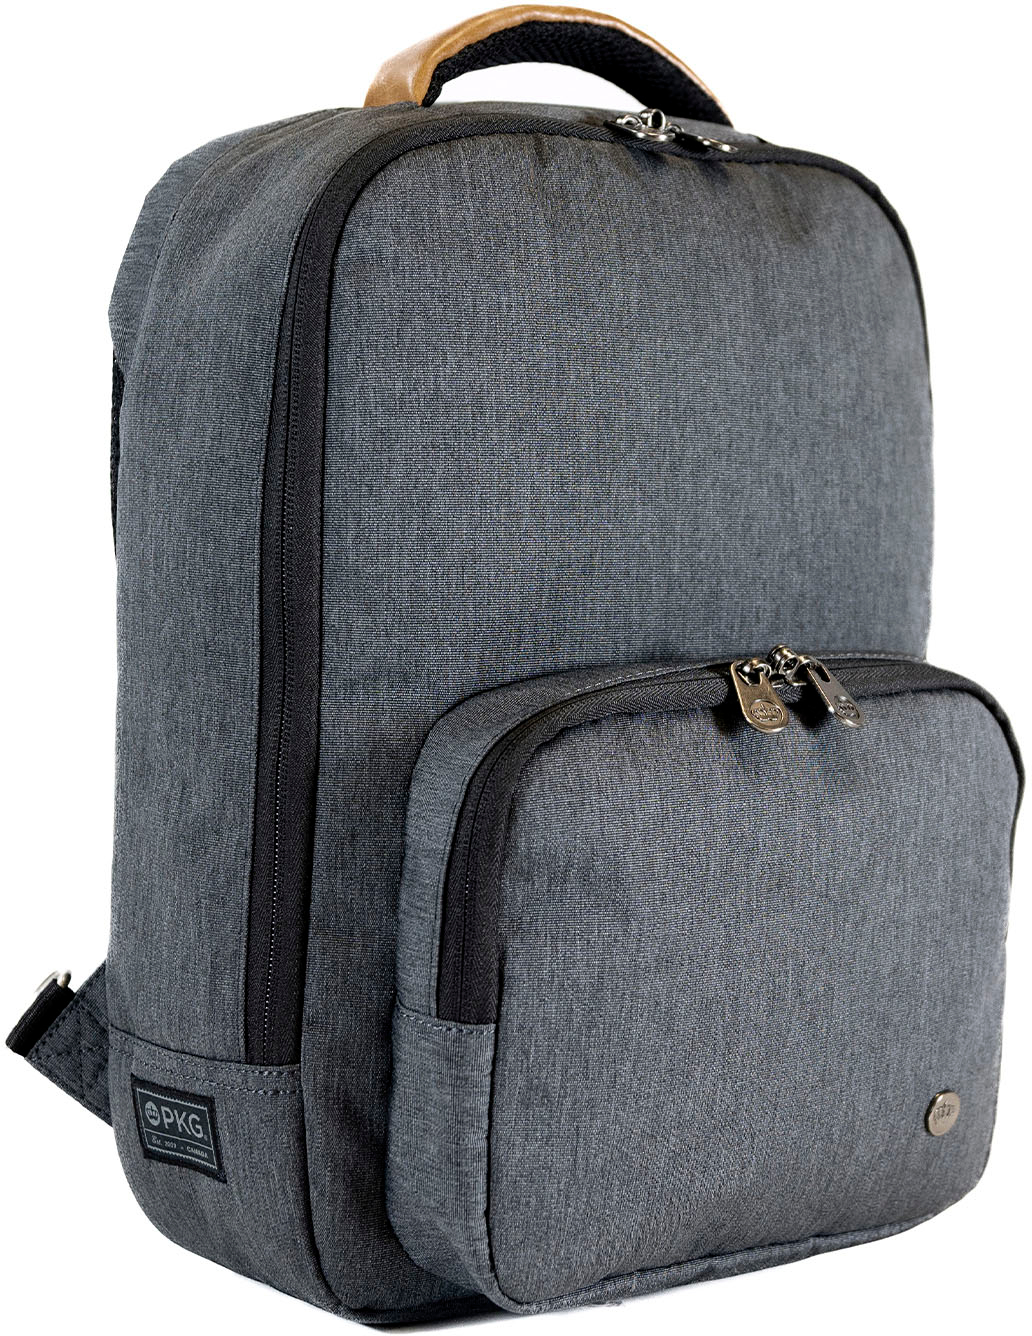 Back View: PKG - Robson 12L Recycled Crossbody Bag for 14" Laptop - Dark Grey/Tan